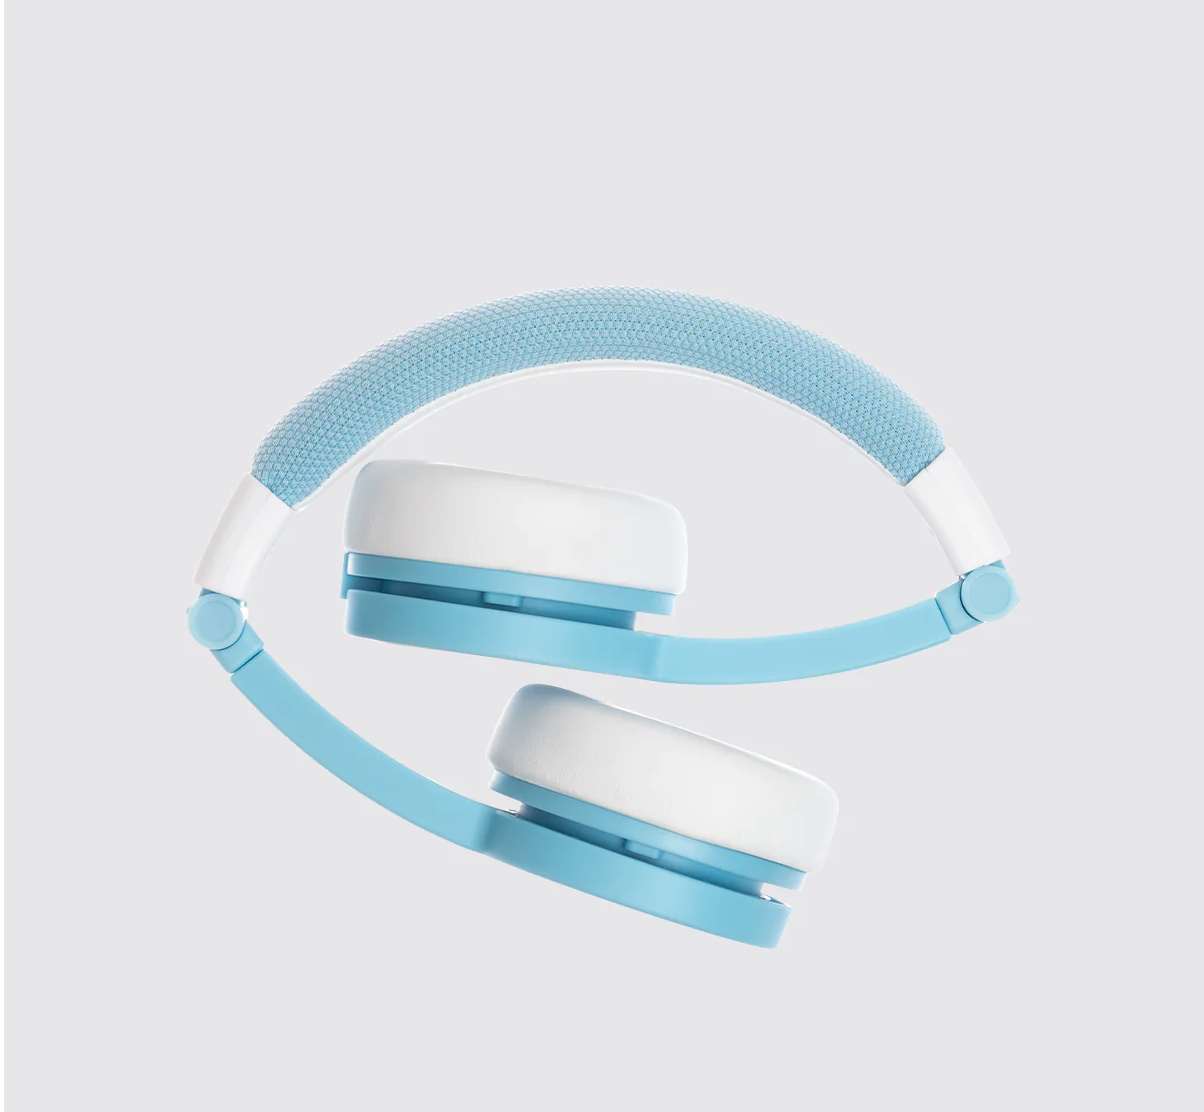 Headphones Light Blue